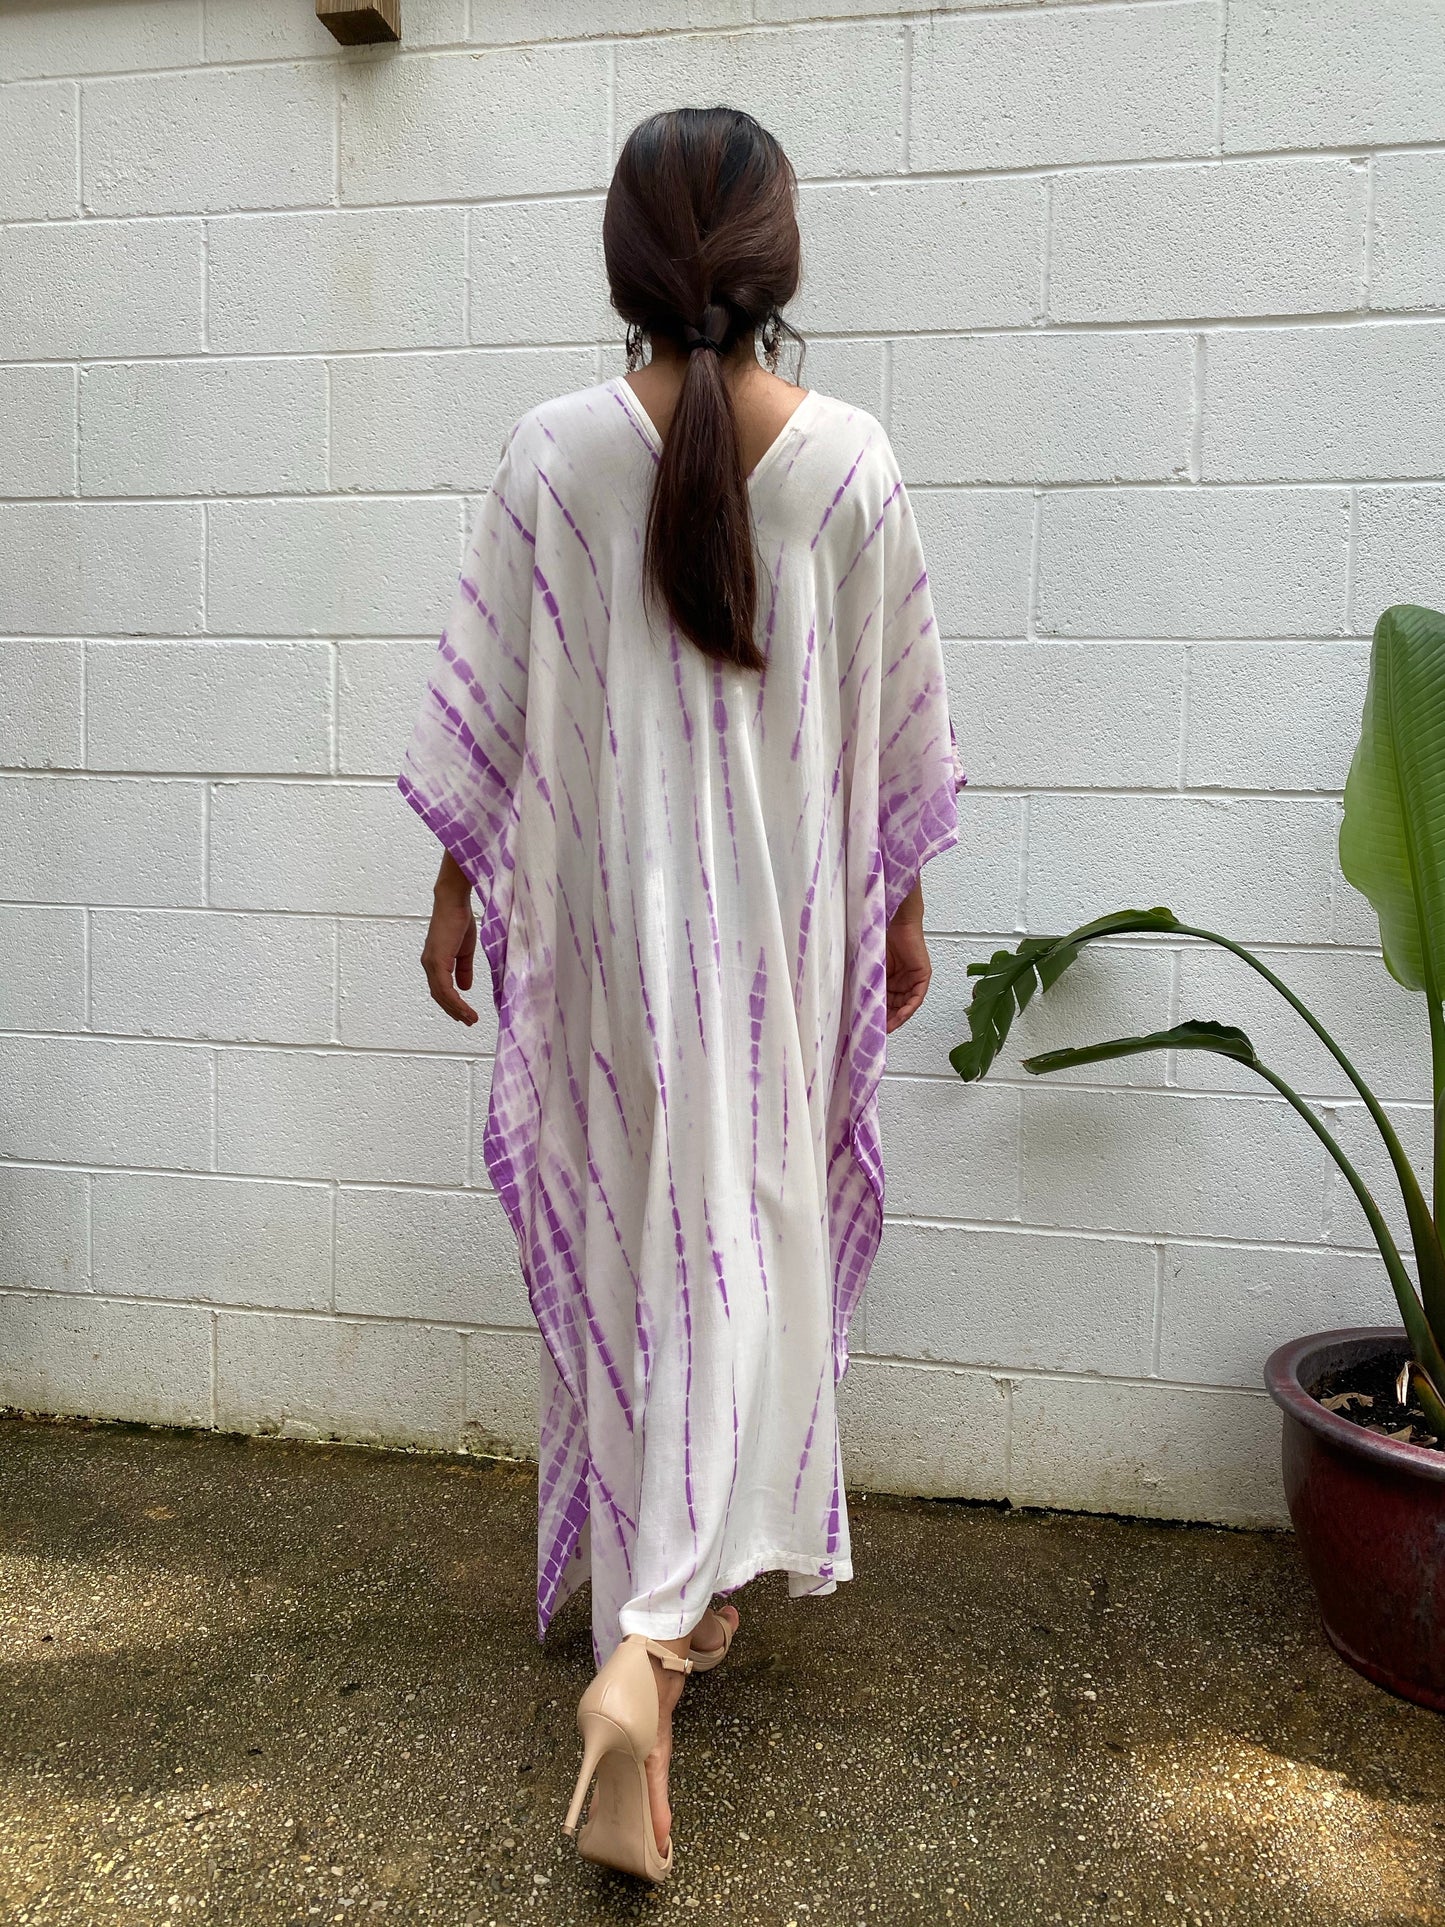 MALA handworks Nora Kaftan in White and Purple Tie Dye